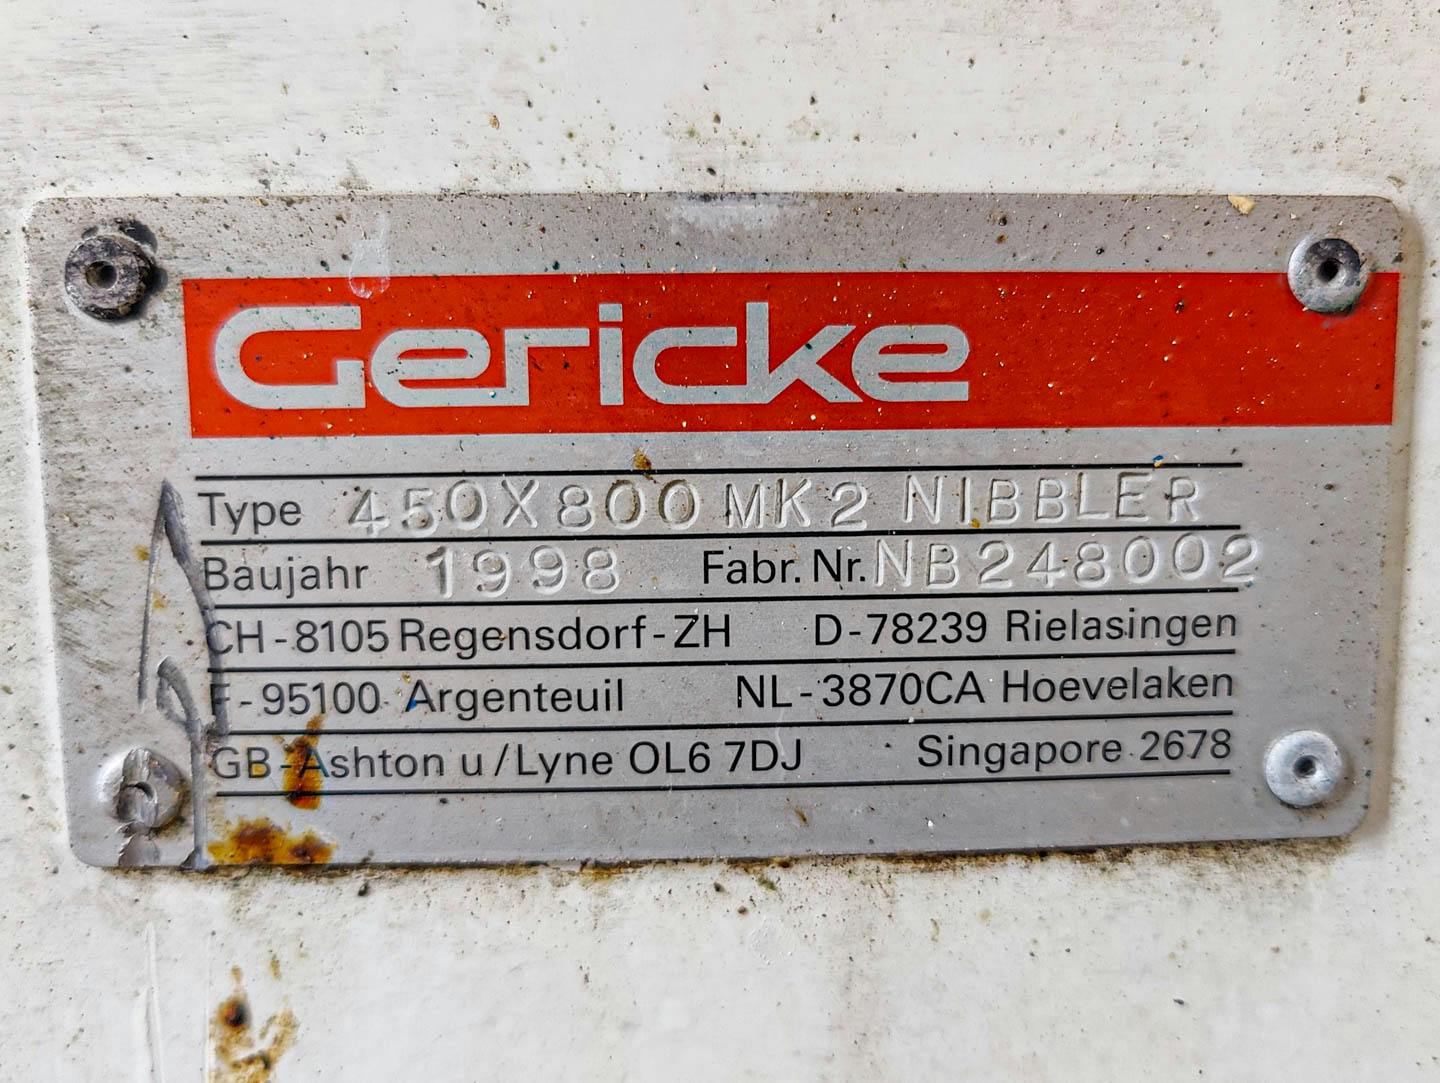 Gericke 450x800 MK2 NIBBLER - Sieve granulator - image 11